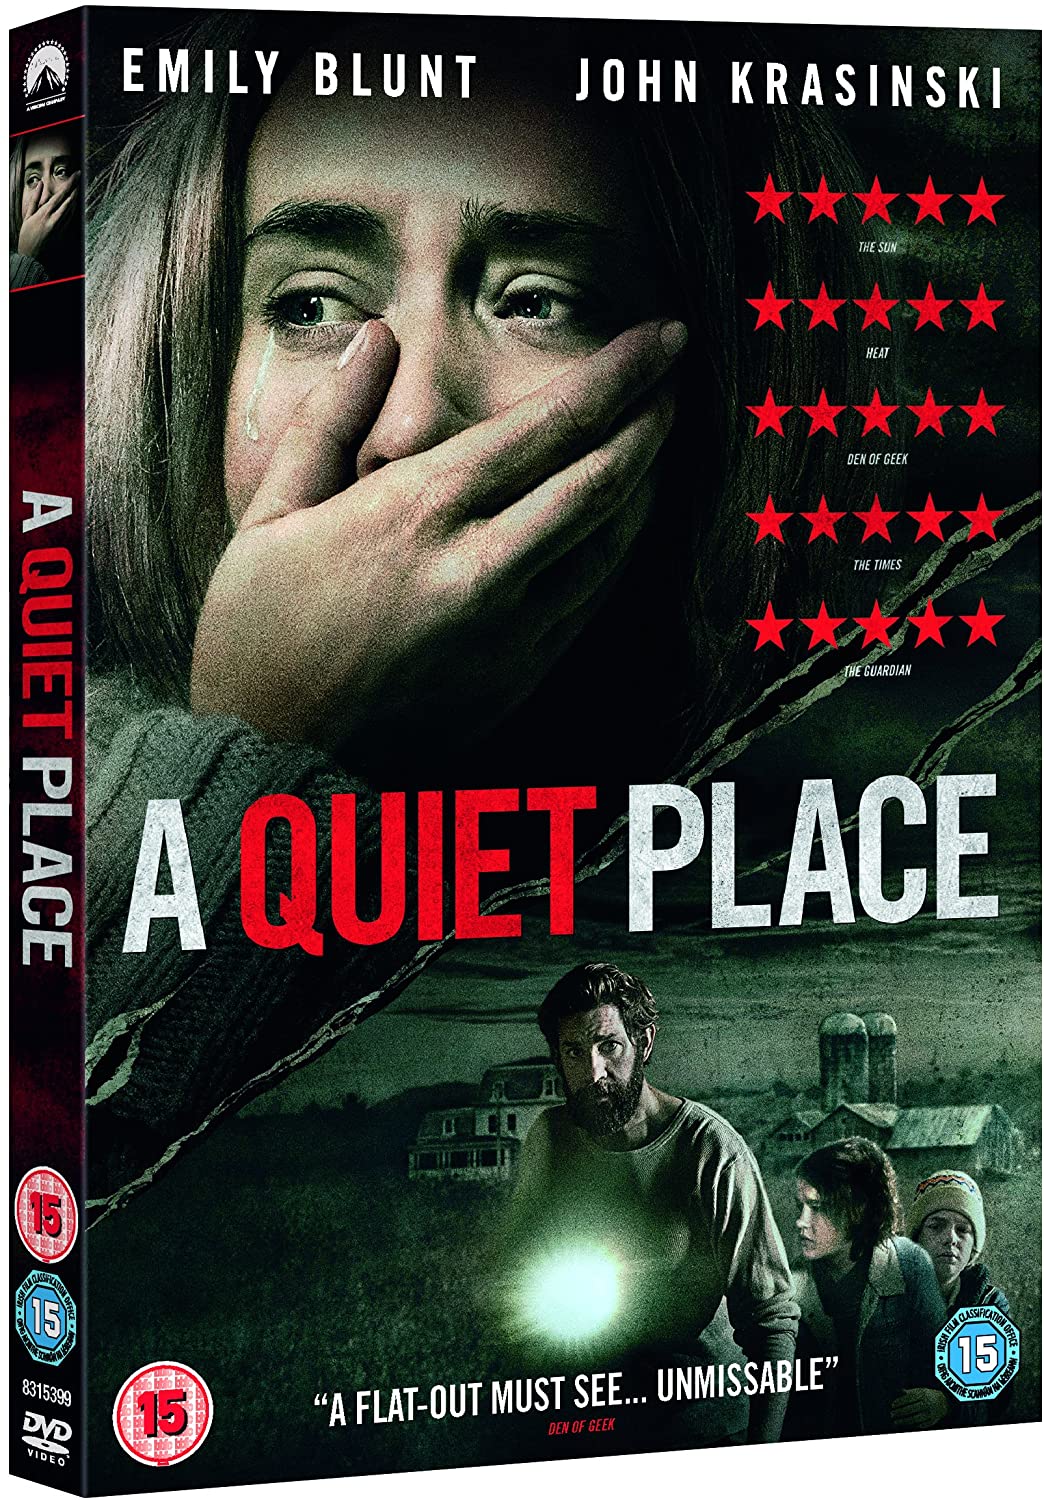 A Quiet Place [2018] – Horror/Science-Fiction [DVD]